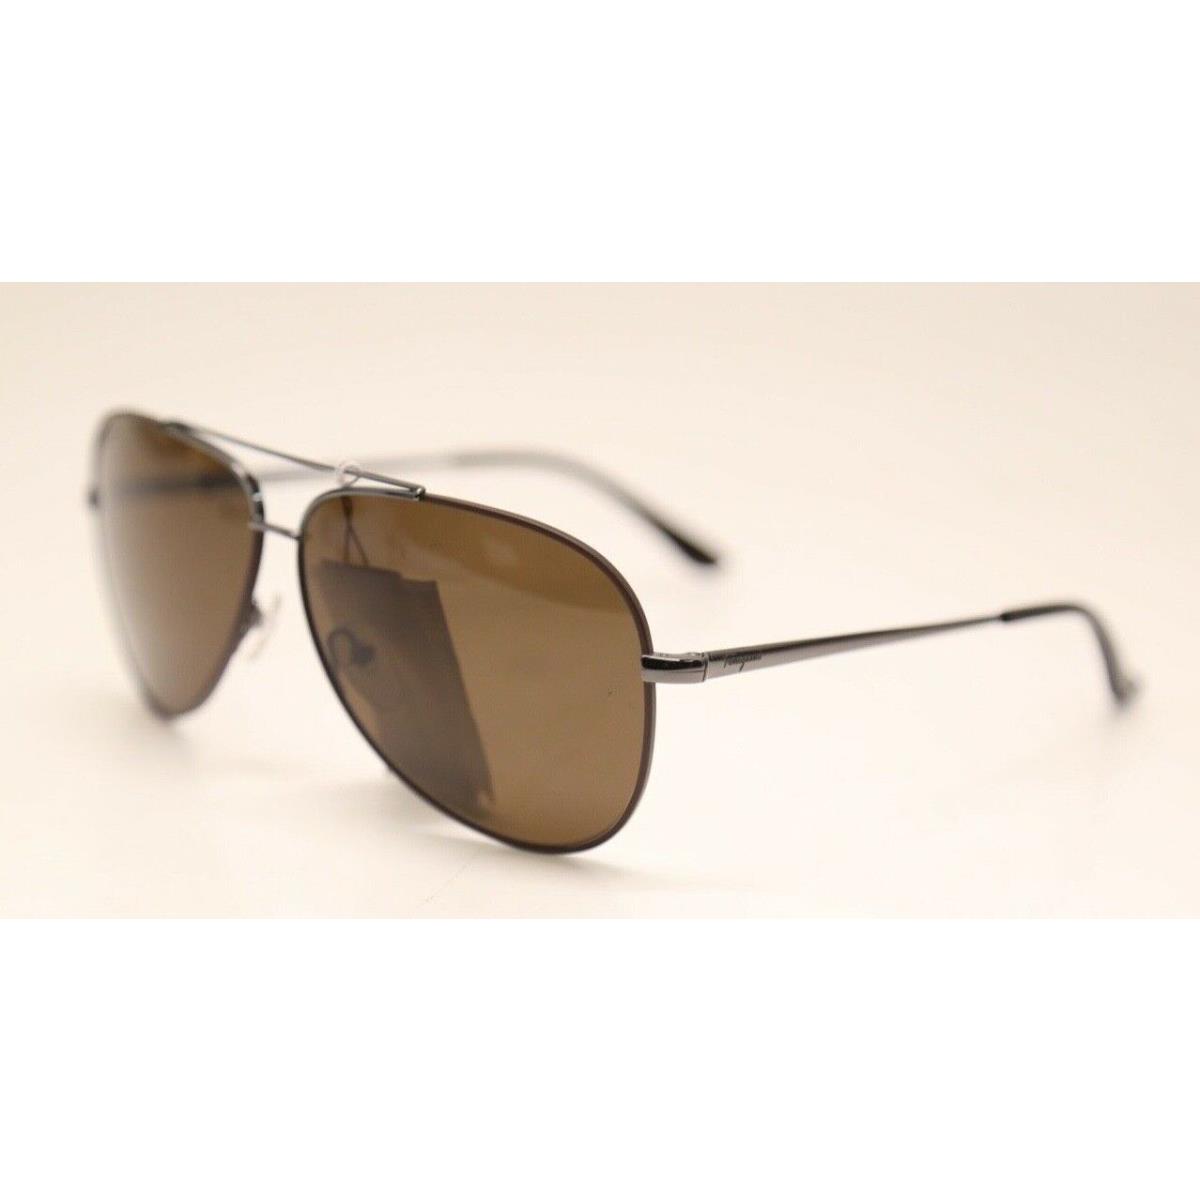 Salvatore Ferragamo sunglasses  - Shiny Gunmetal Frame, Cocoa Lens 1